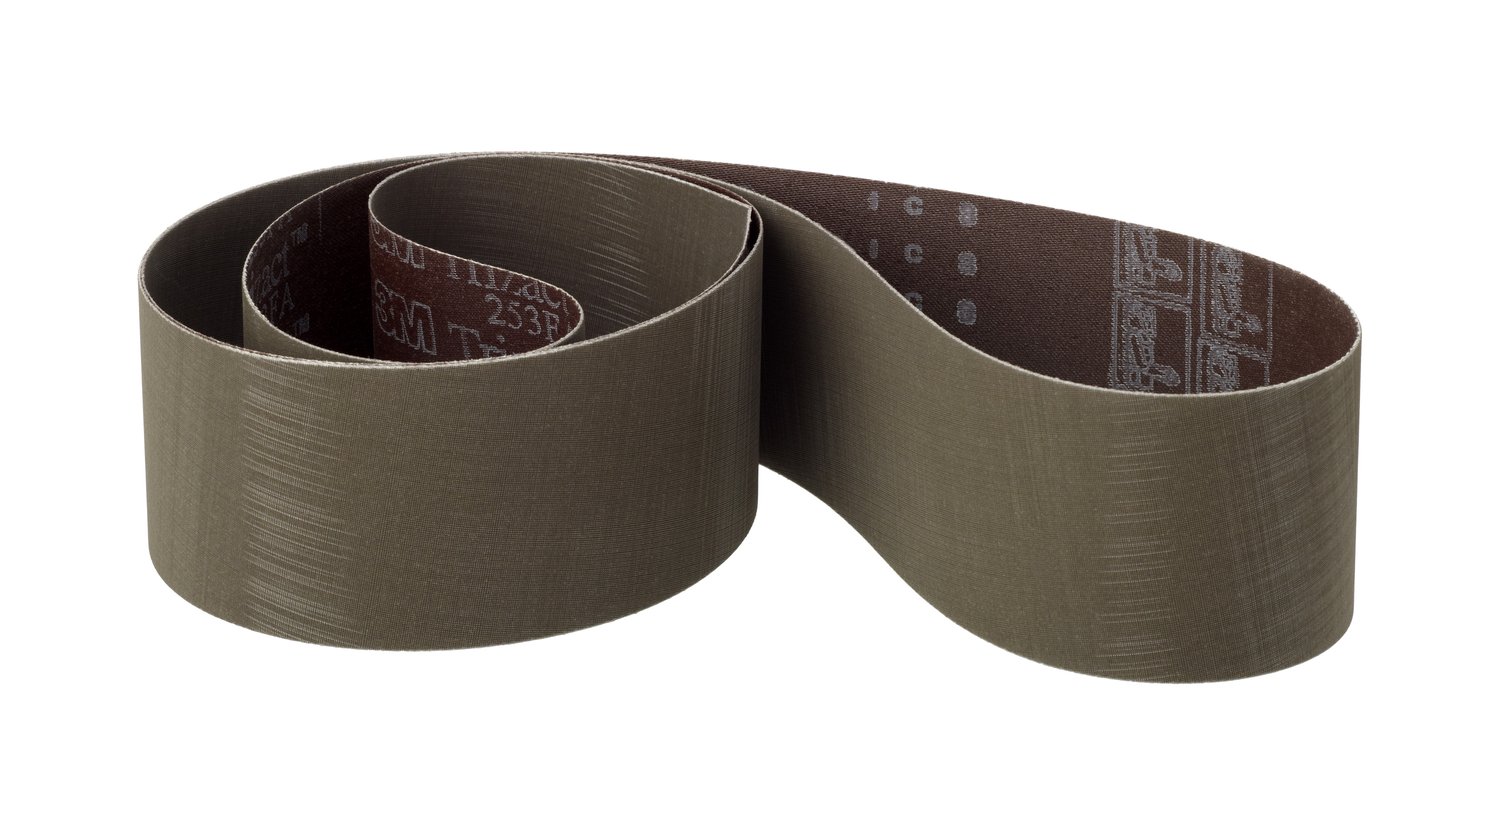 7010516300 - 3M Trizact Cloth Belt 253FA, A16 XF-weight, 6 in x 60 in, Film-lok,
Full-flex